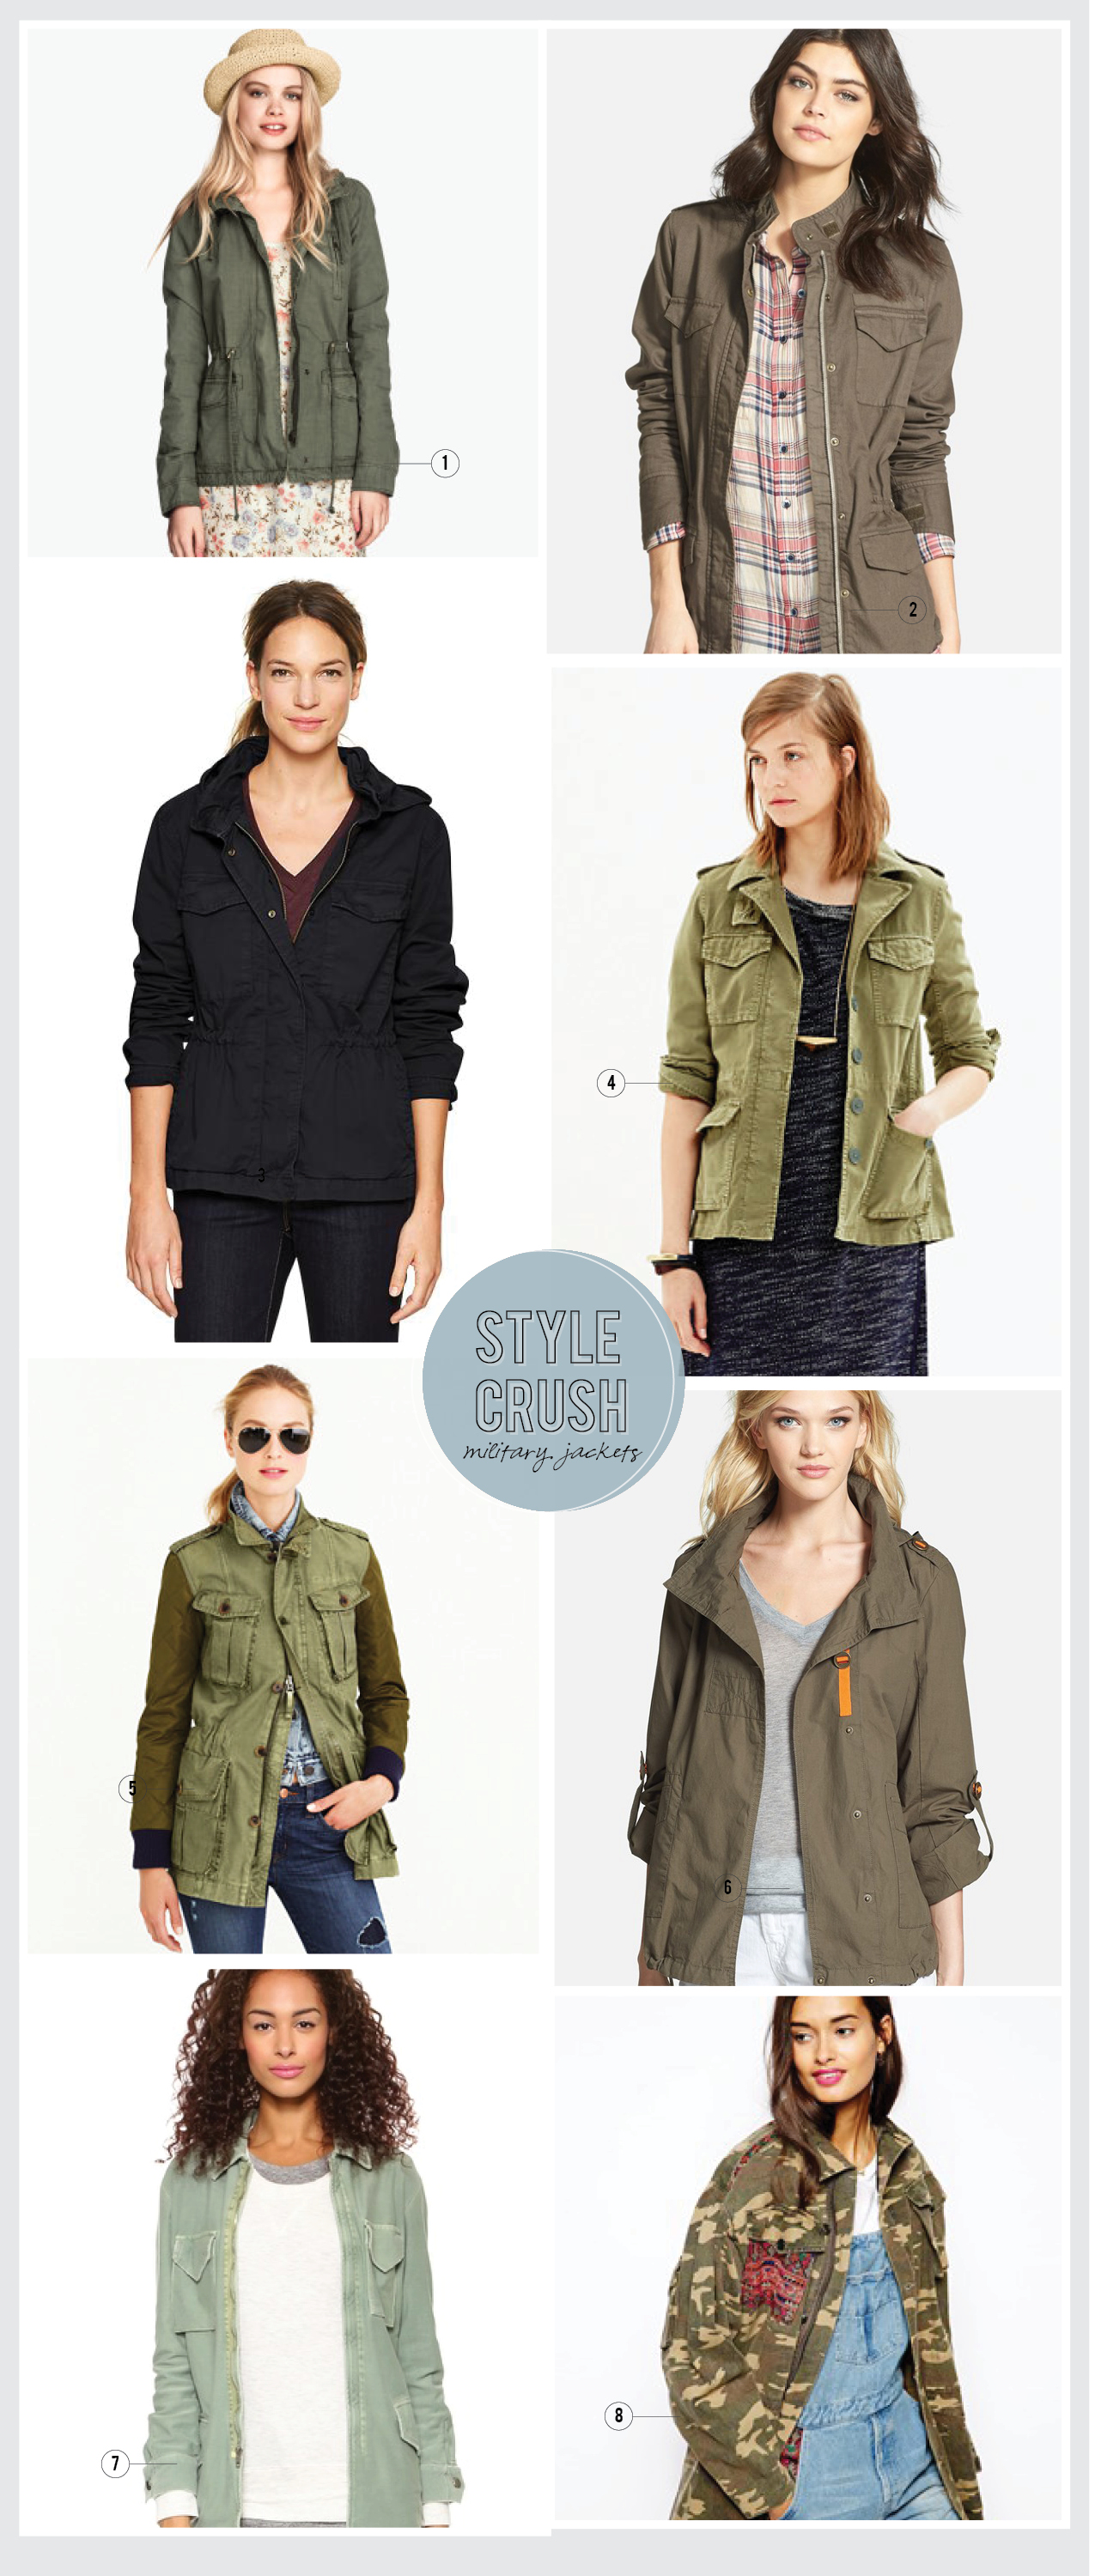 style-crush-military-jacket // aliceandlois.com